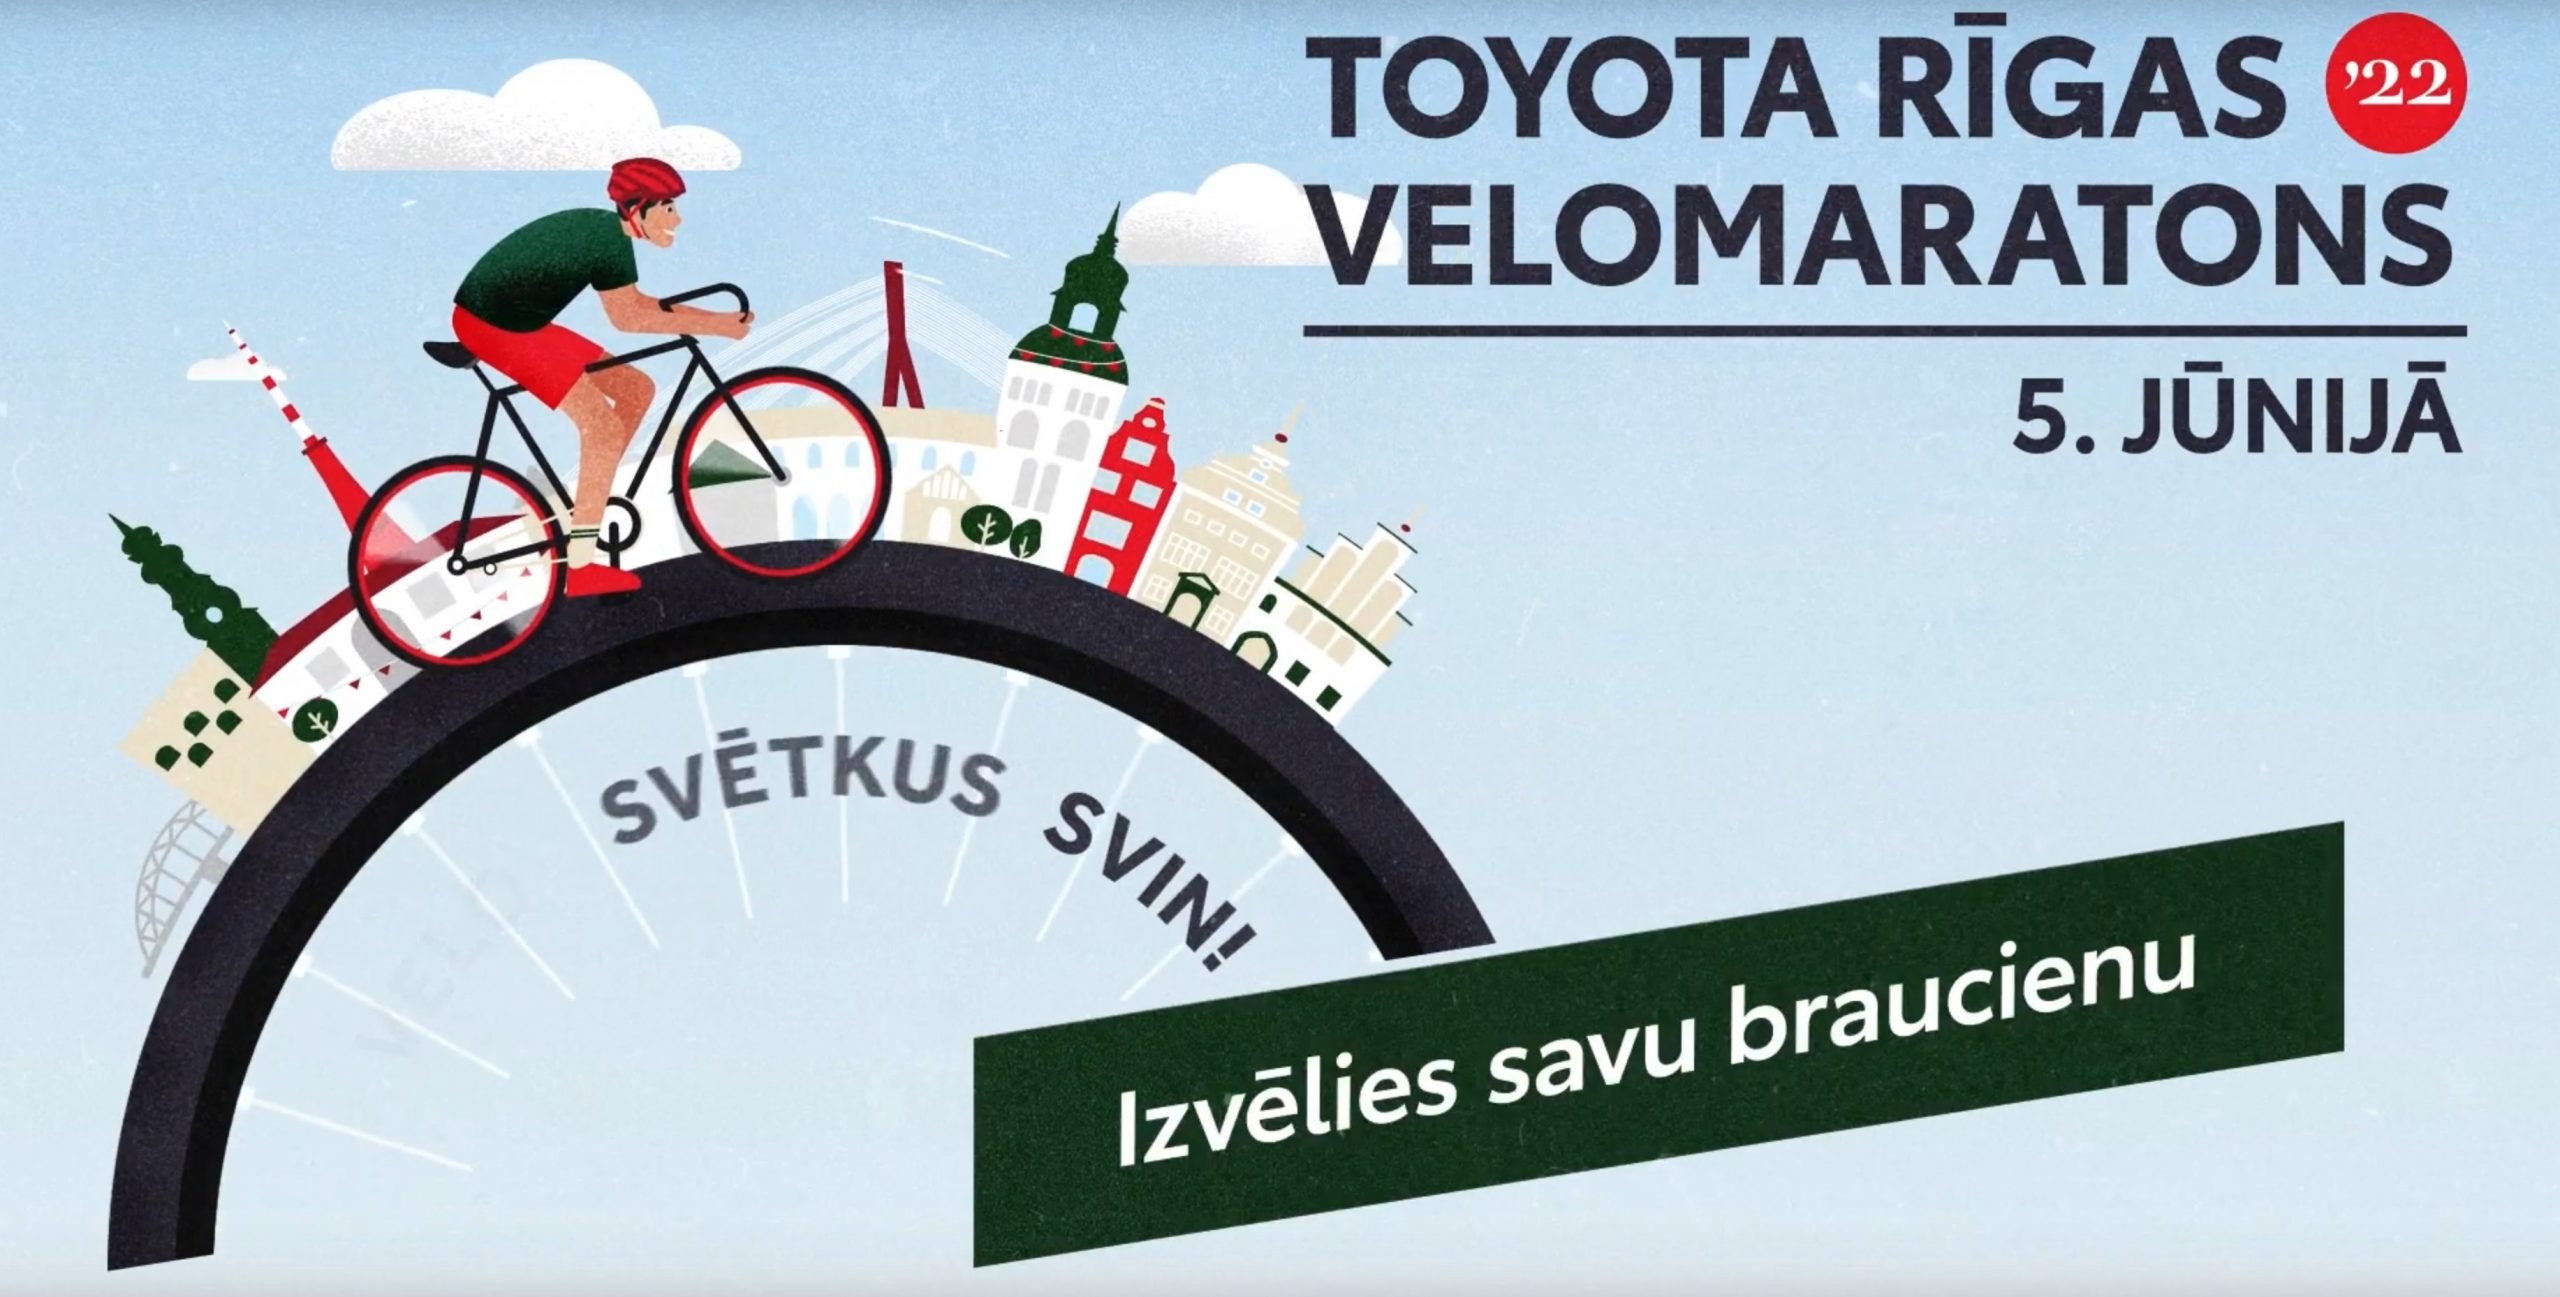 Toyota Riga Cycling Marathon Children's event